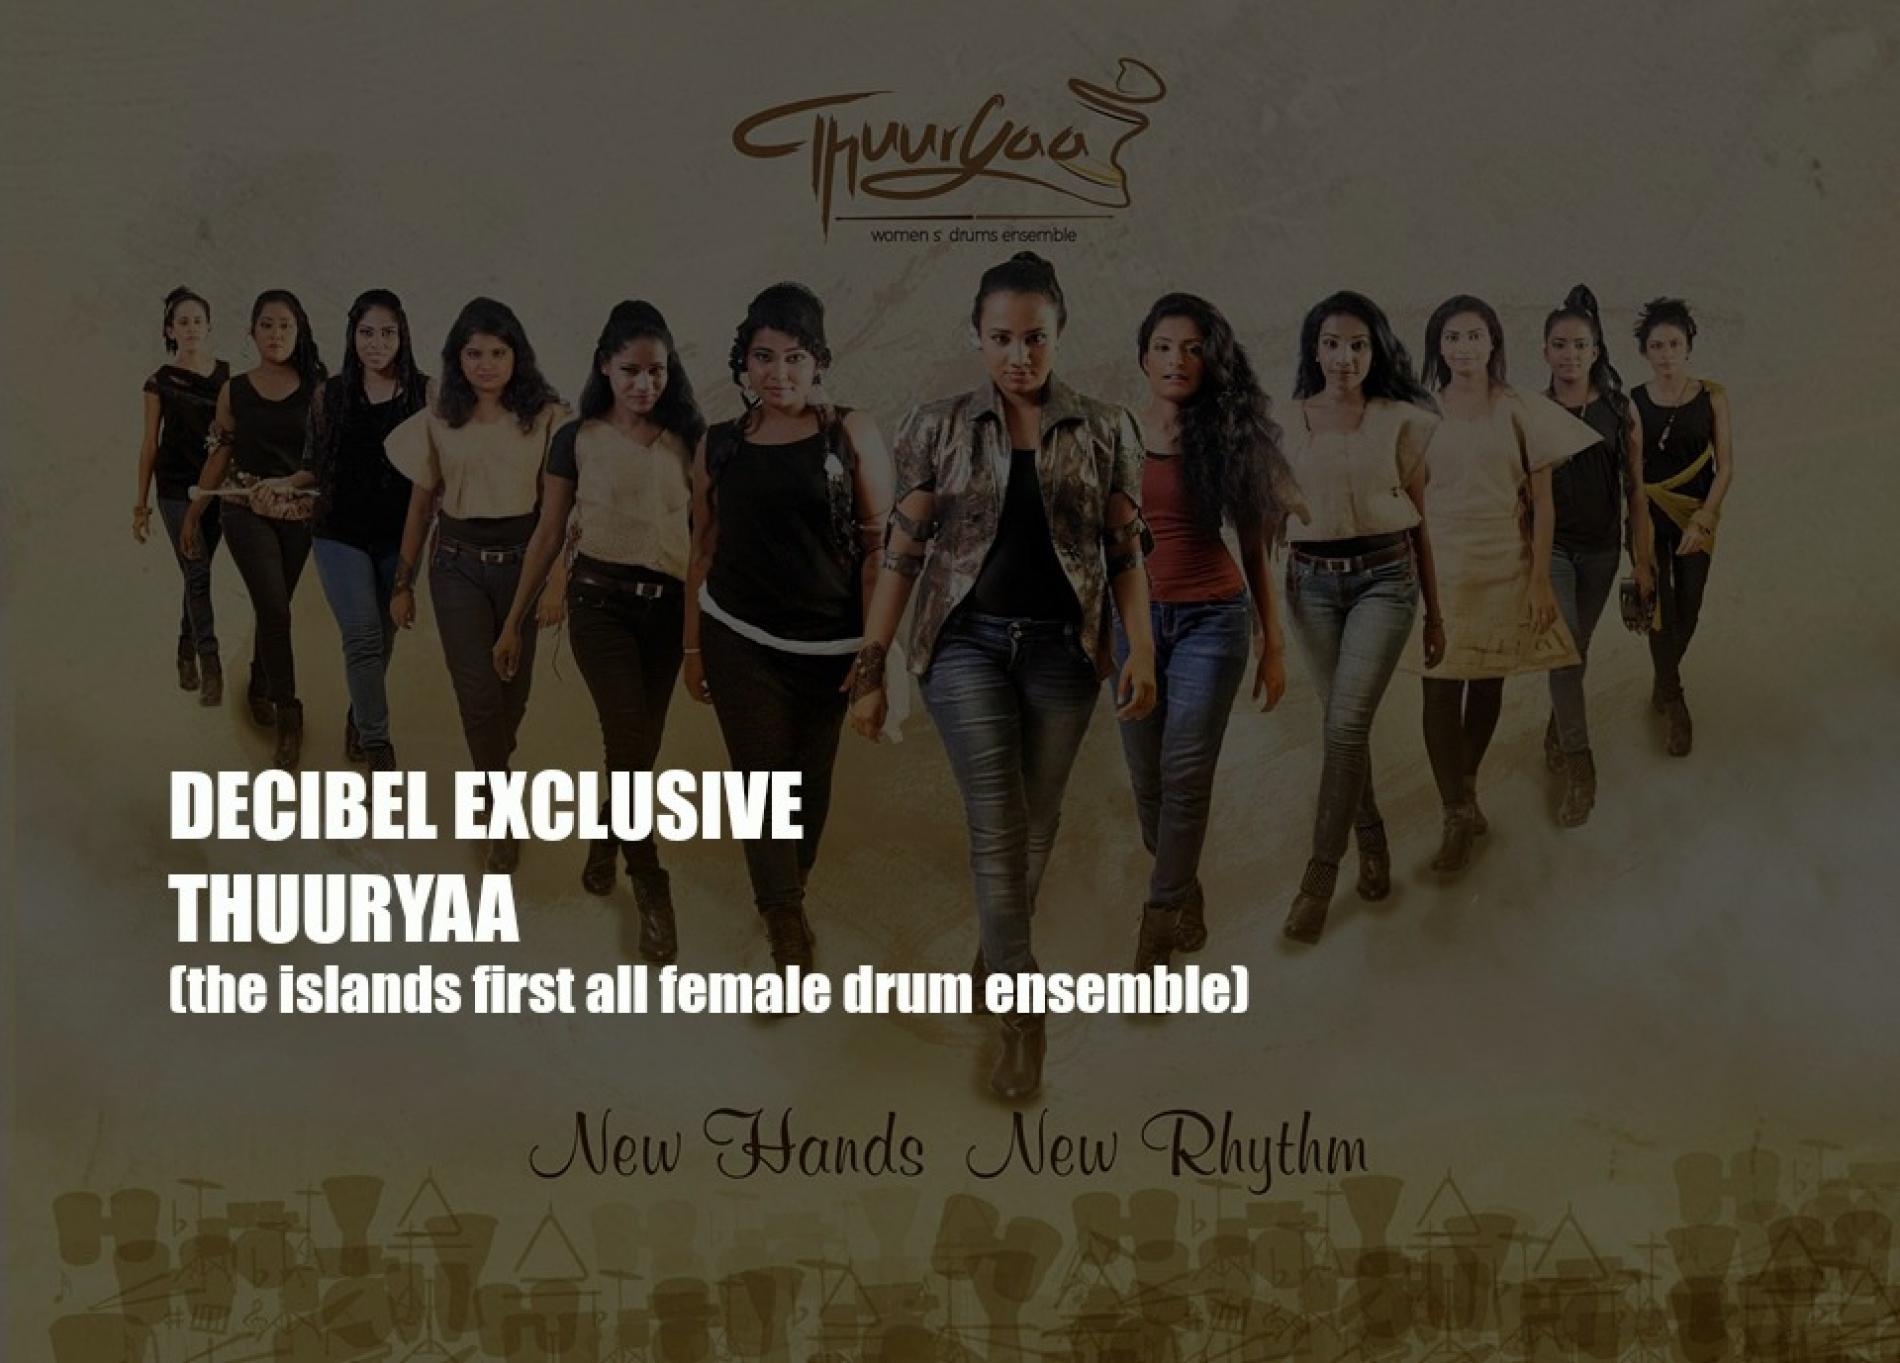 Decibel Exclusive : Thuuryaa (SL’s First All Female Drum Ensemble)